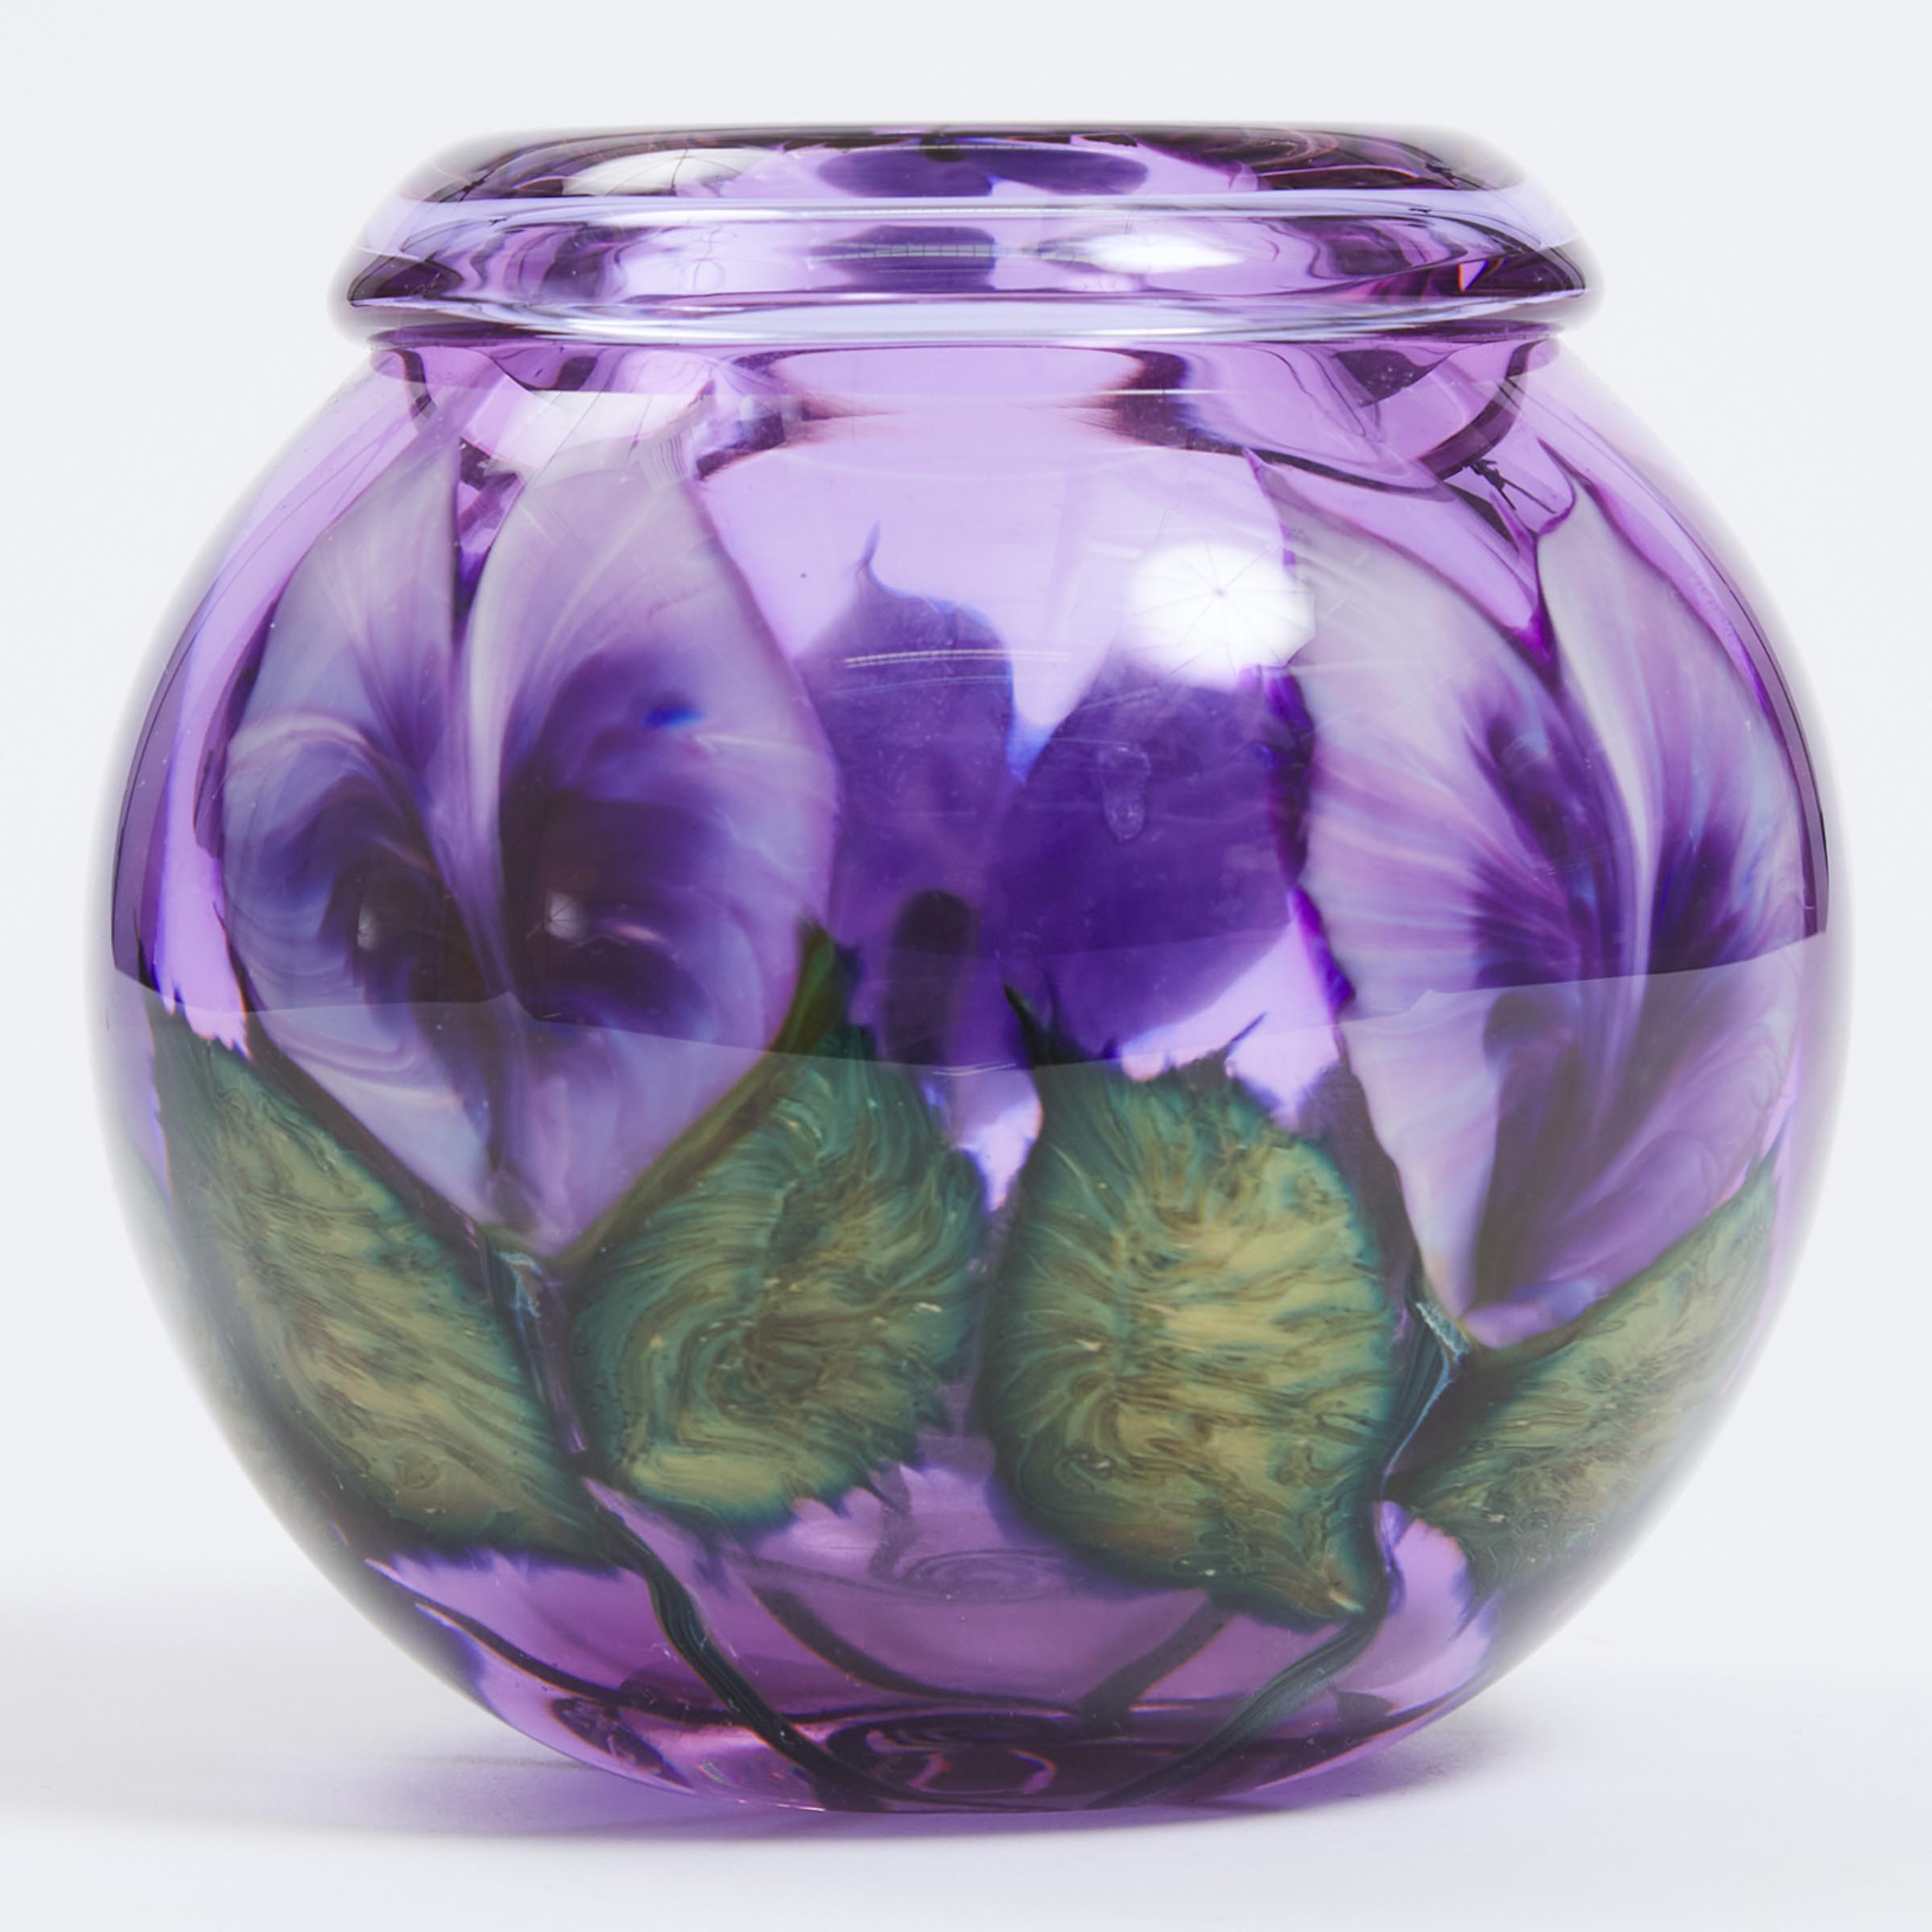 Daniel Lotton (American, b.1963), Floral Glass Vase, 2001